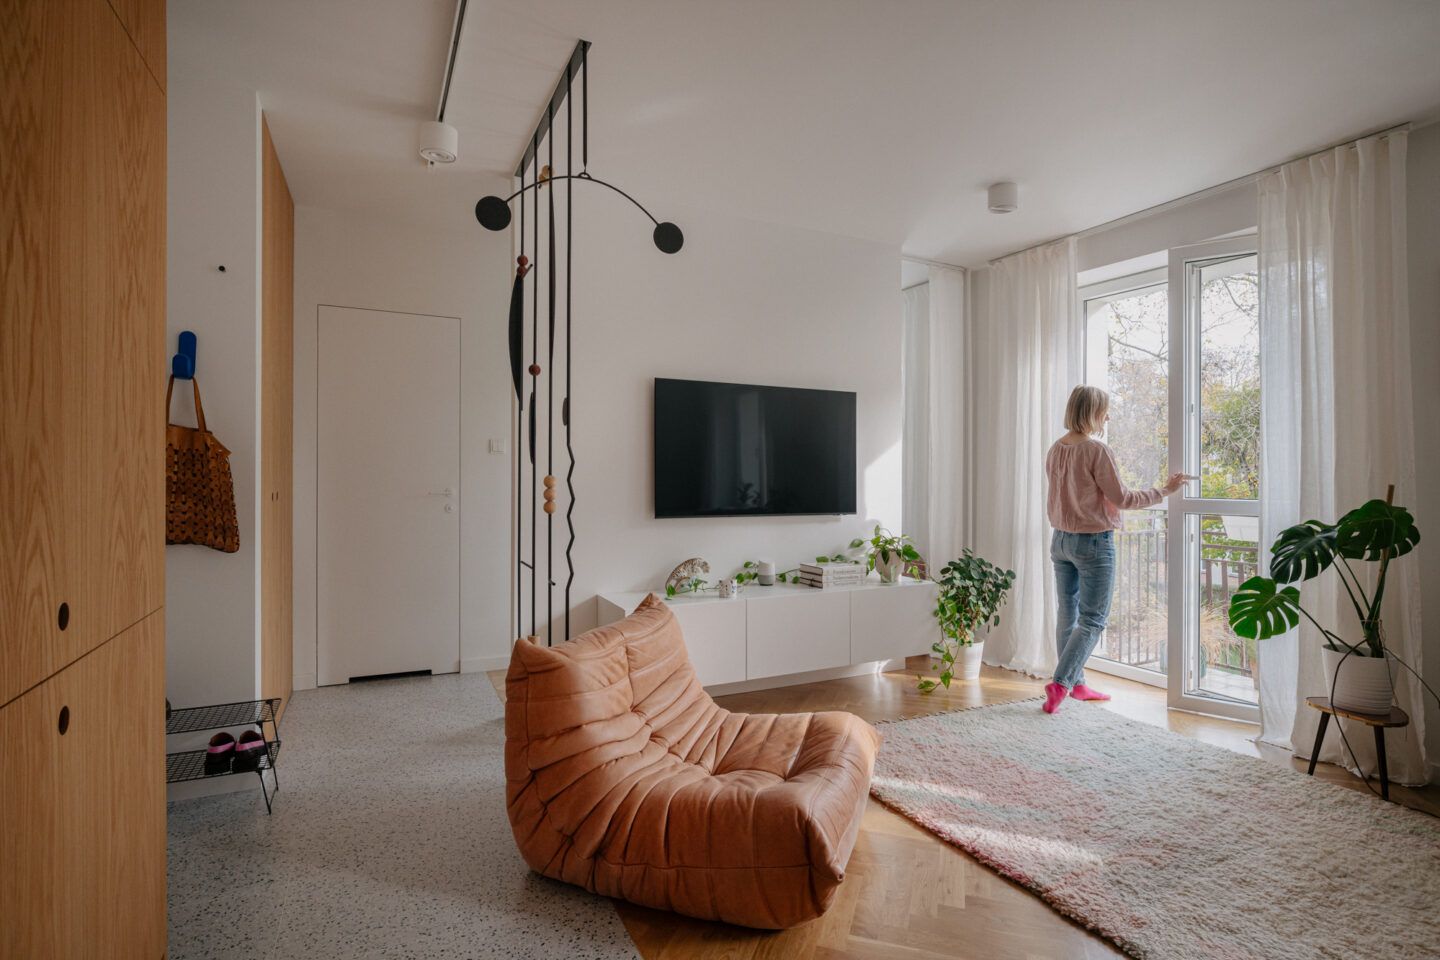 Inspiring Tiny Studio Apartment Transform a Small Space into a Stylish Studio Haven